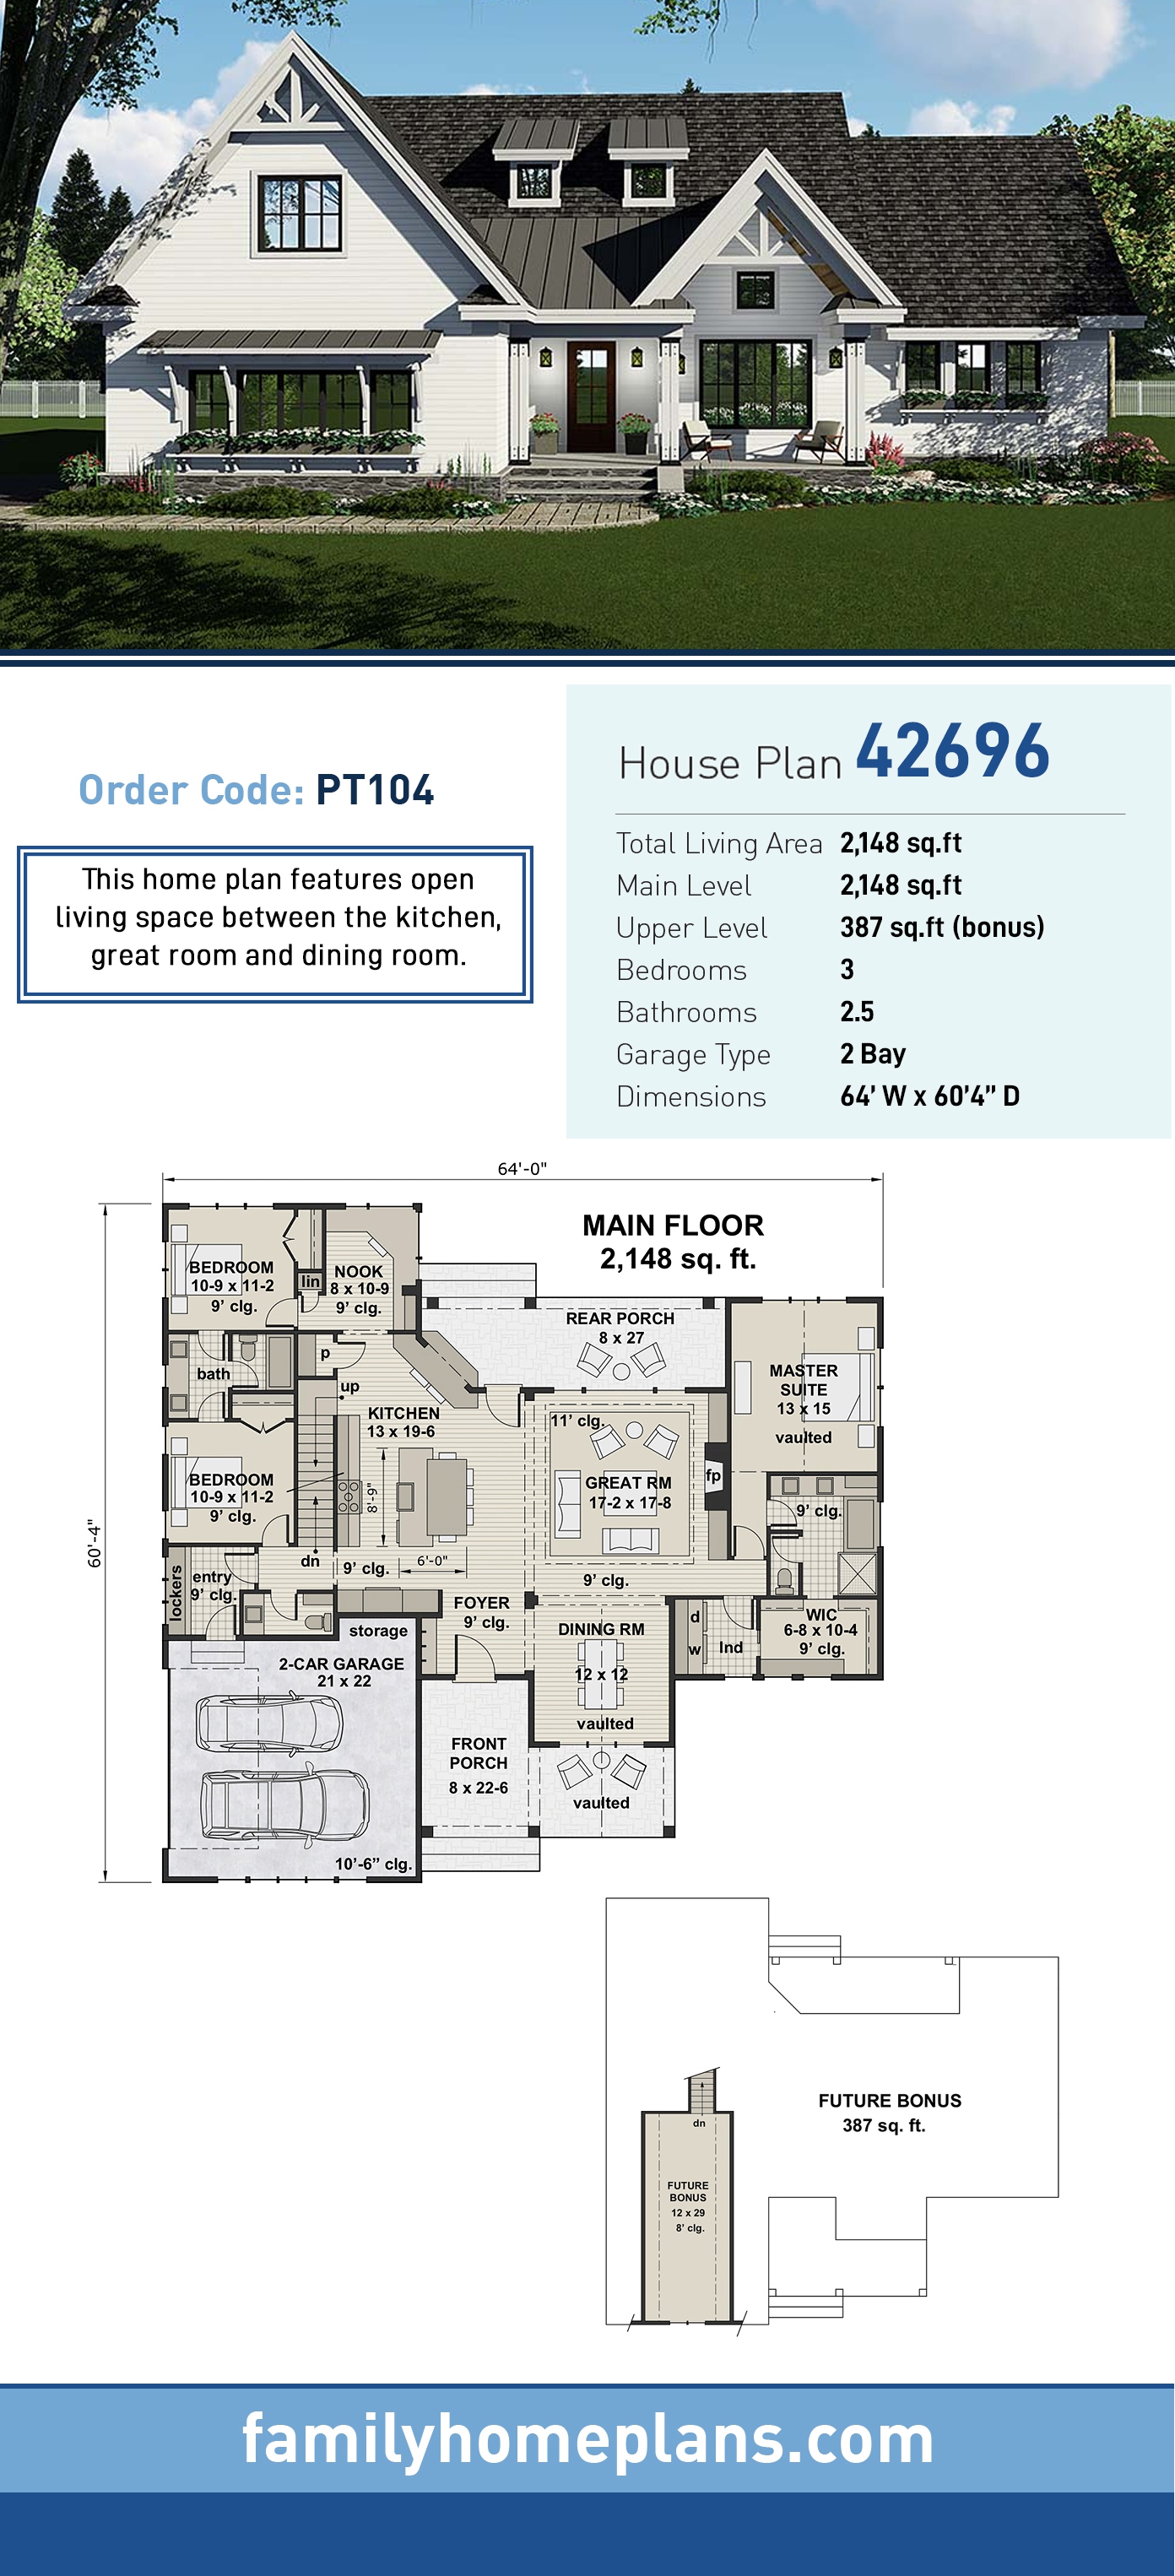 House Plan 42696